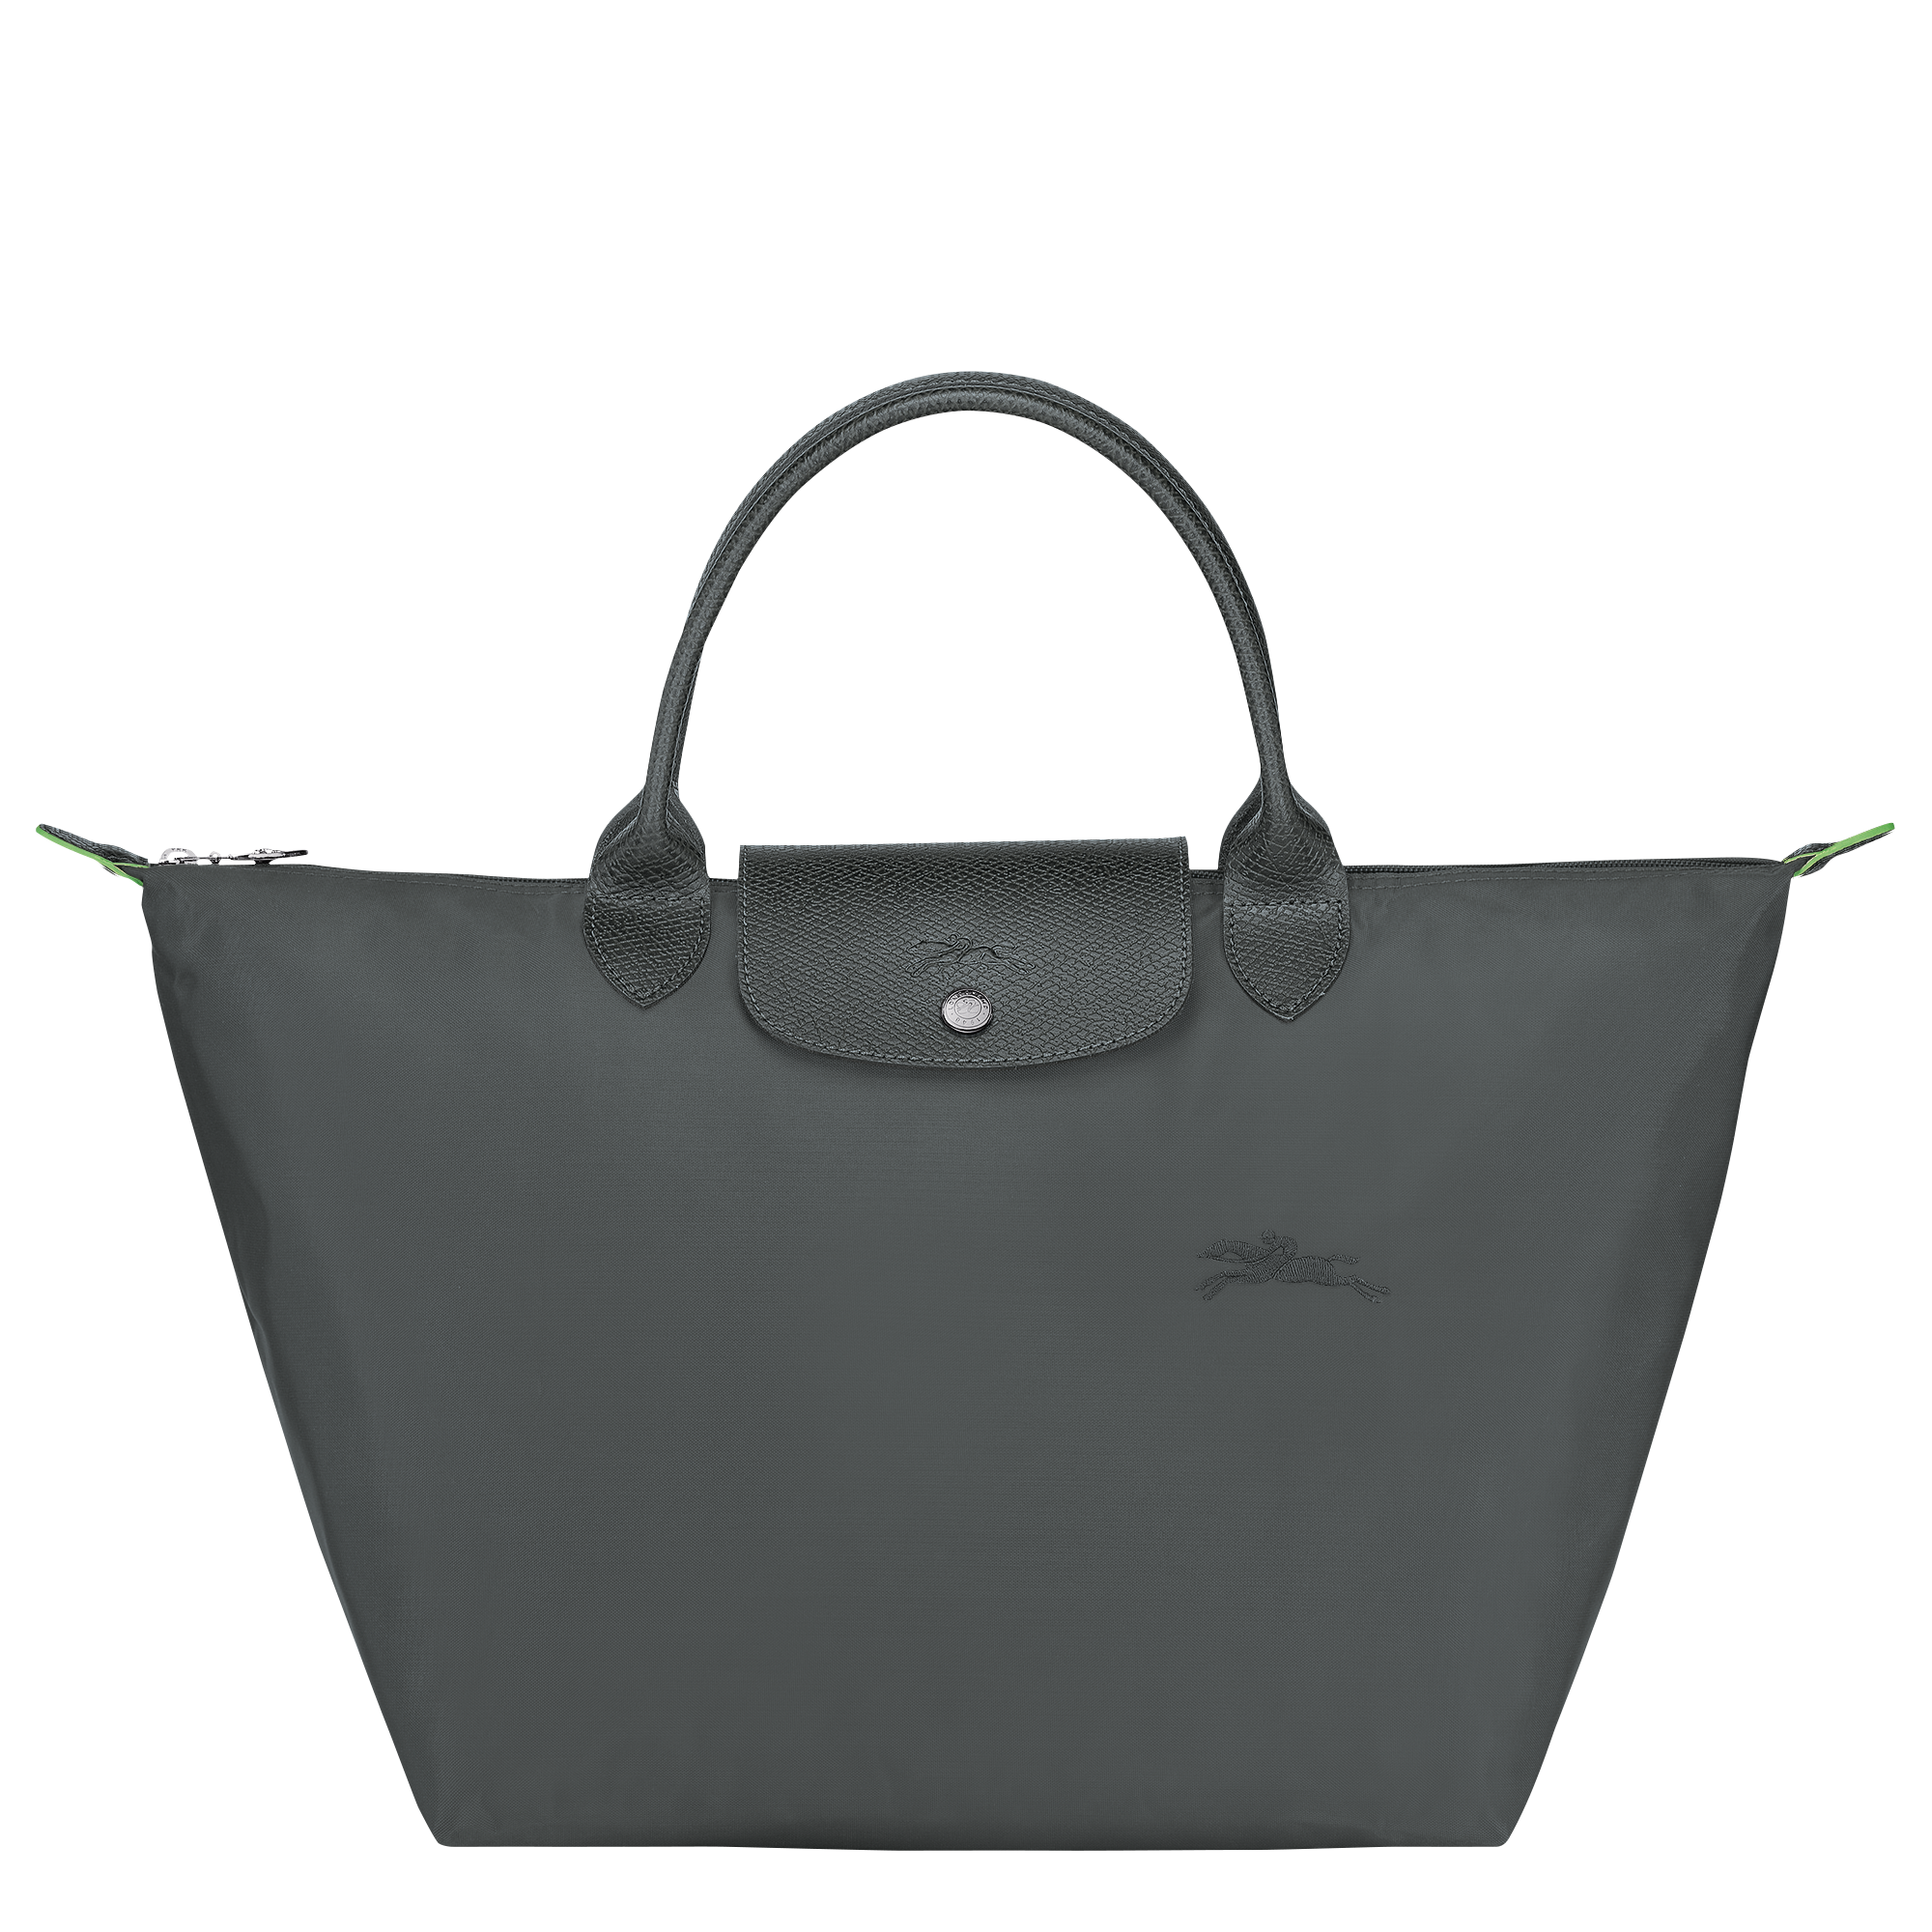 Le Pliage Green Handbag M, Graphite